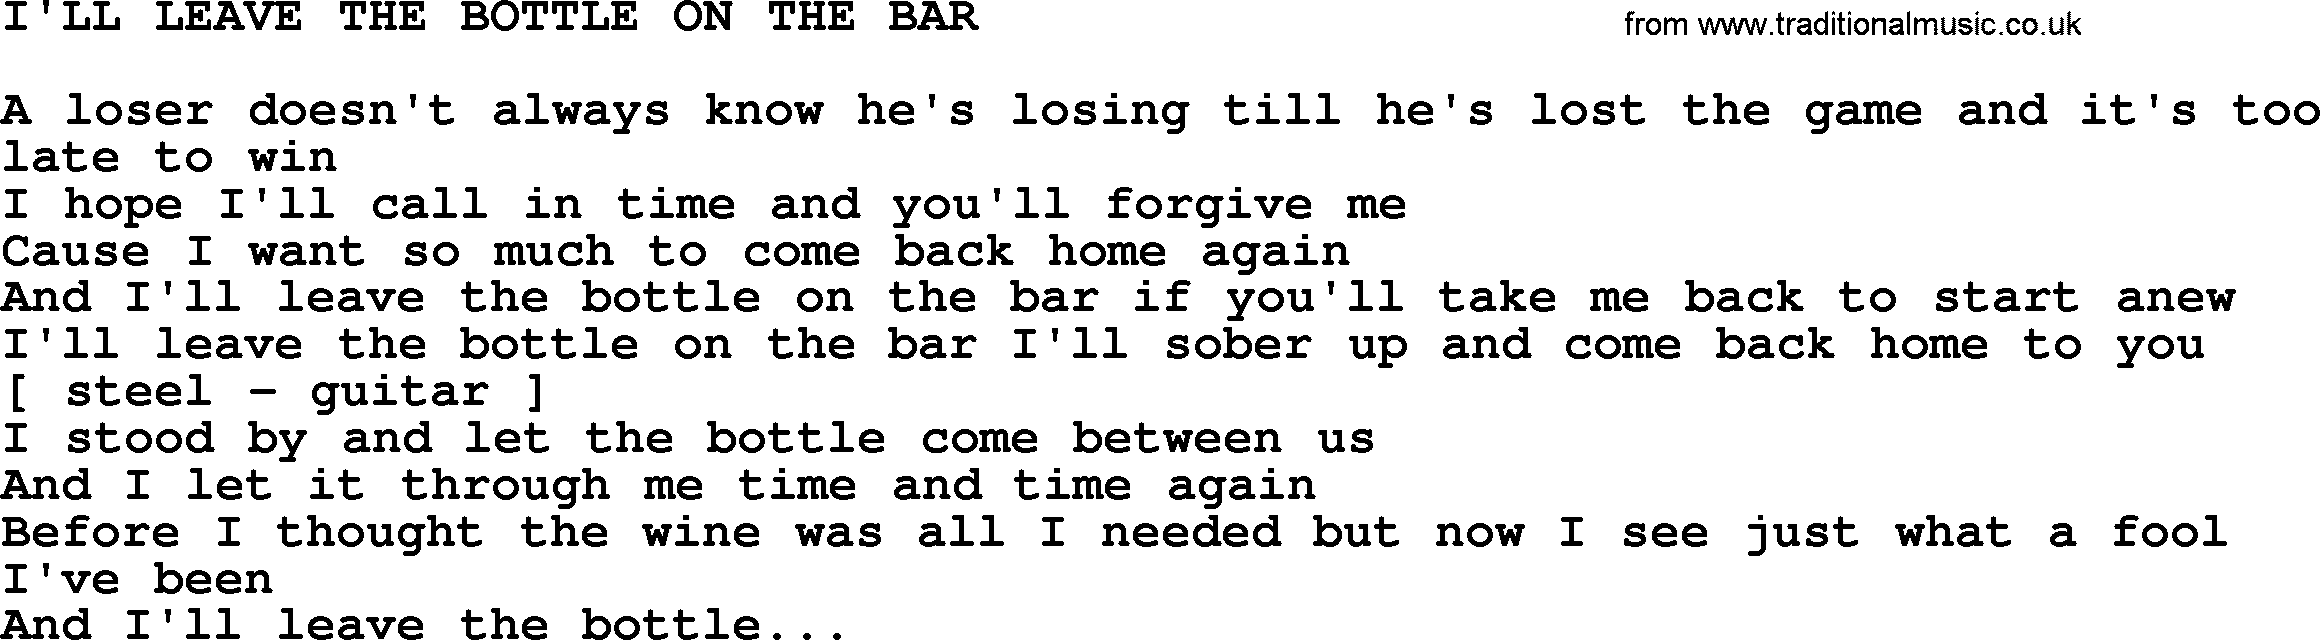 Merle Haggard song: I'll Leave The Bottle On The Bar, lyrics.